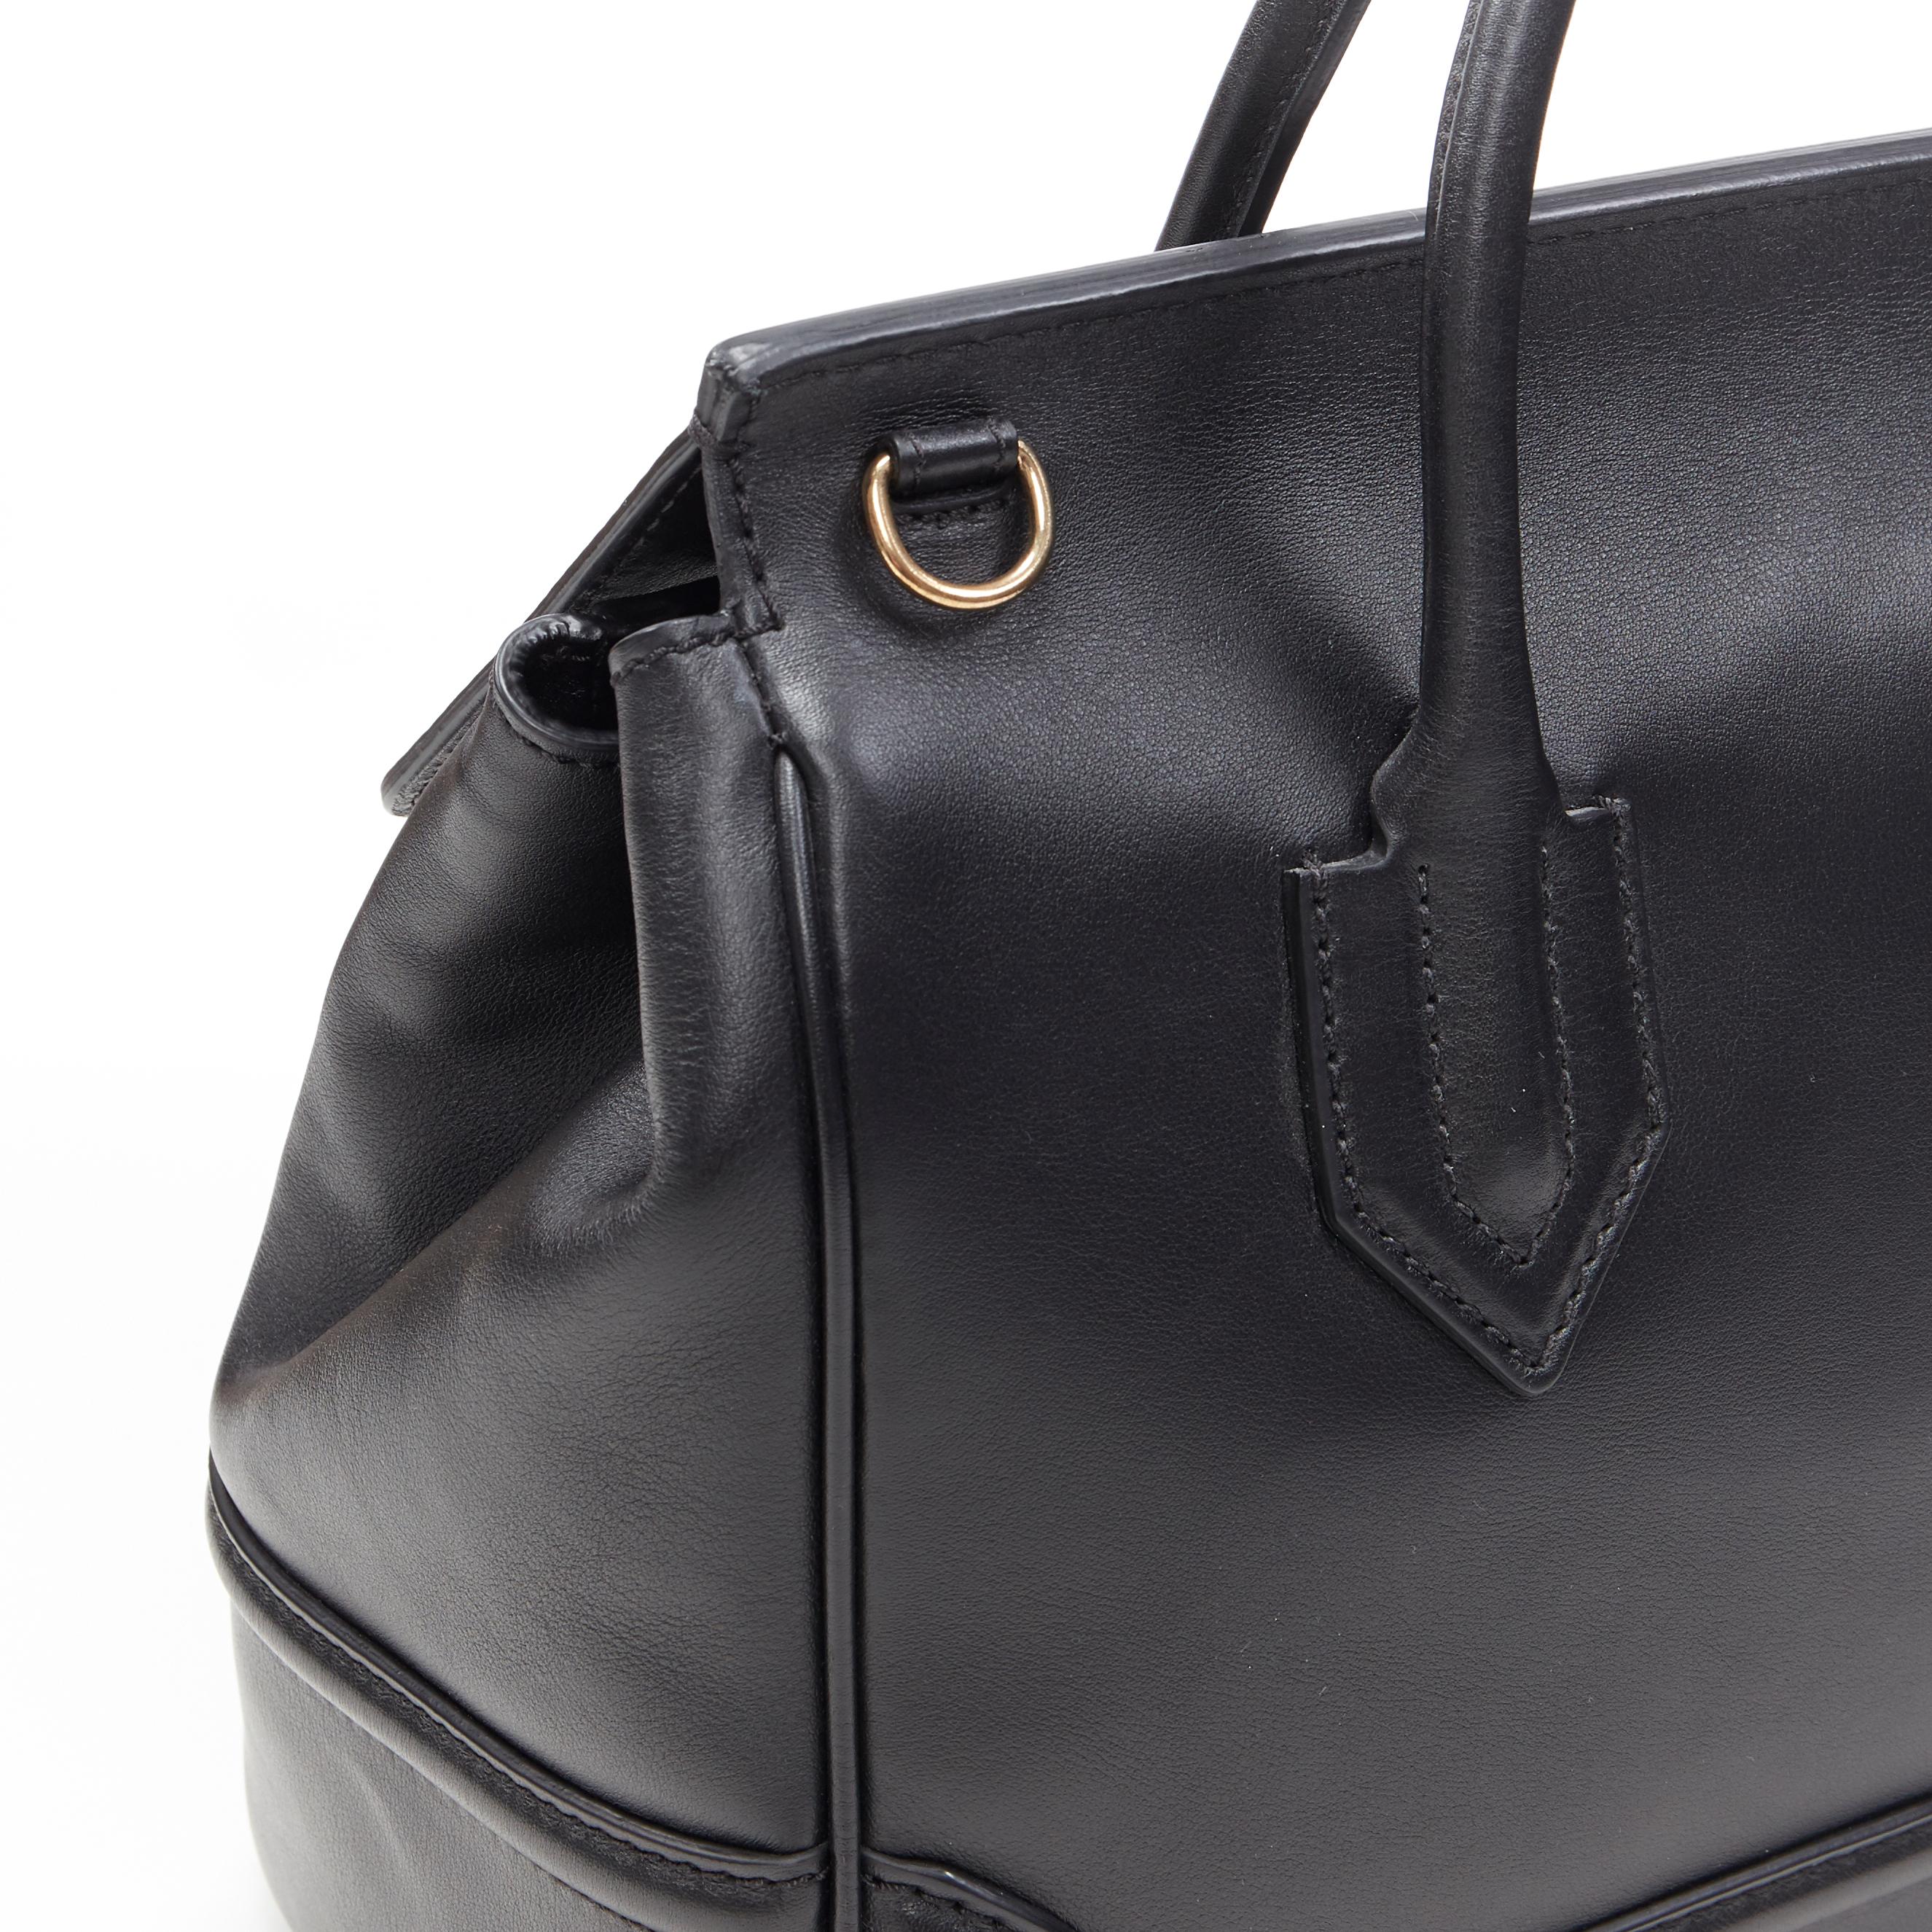 new VERSACE Palazzo Empire Medium classic black calf leather Medusa satchel bag 3